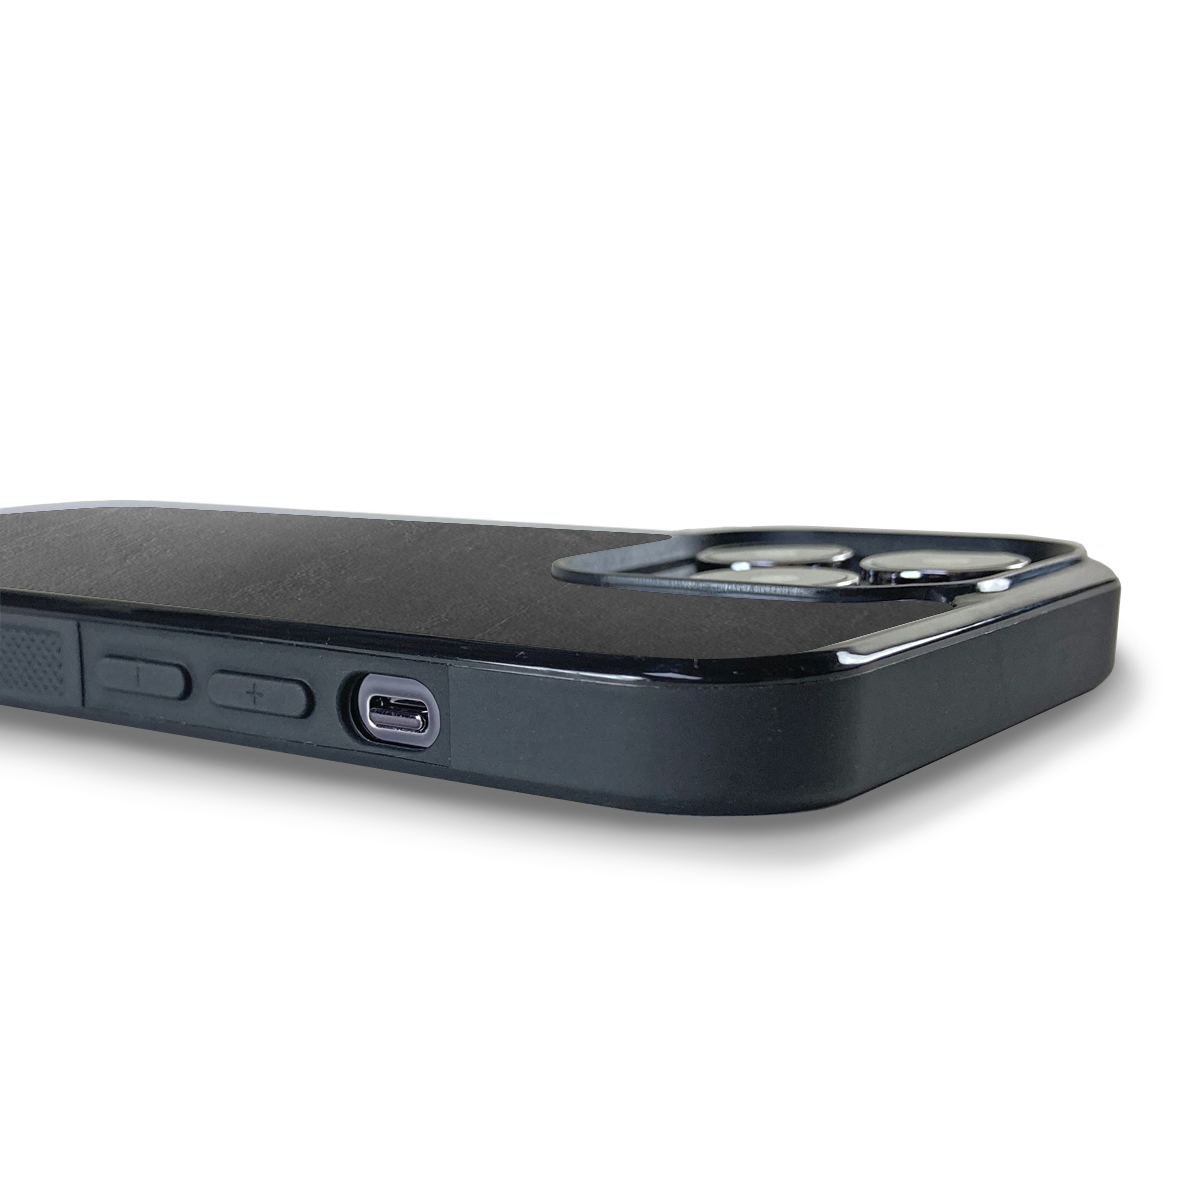 iPhone 13 Pro Max —  Stone Explorer Black Case